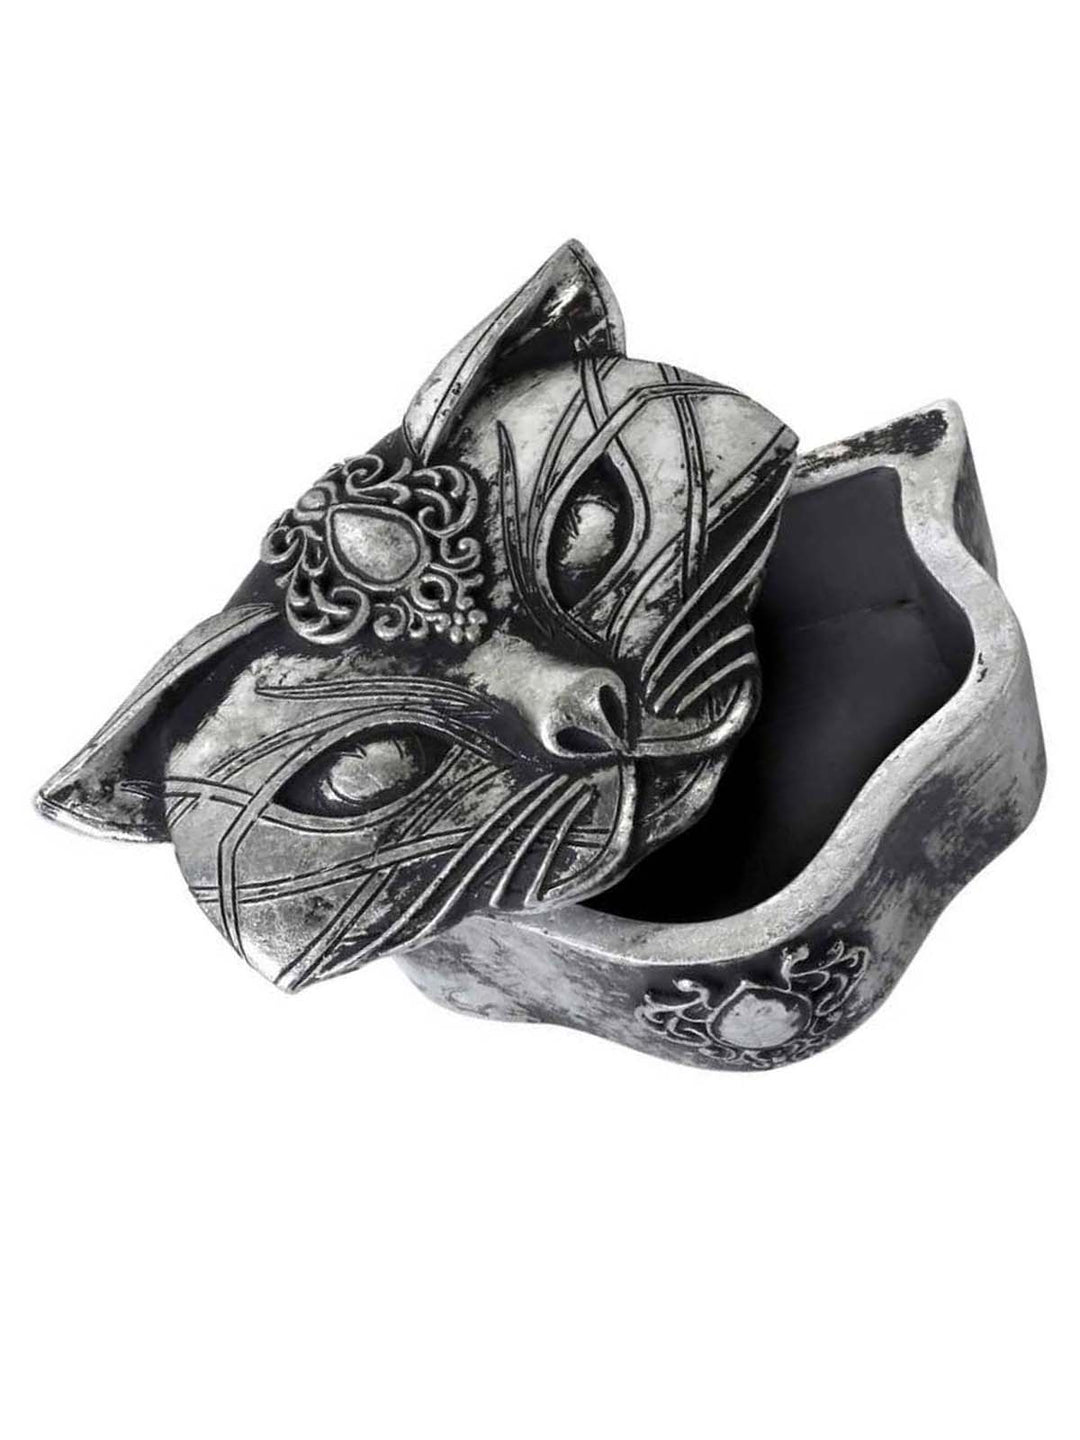 Sacred Cat Trinket Box, Black Cat Jewellery Box, 11cm